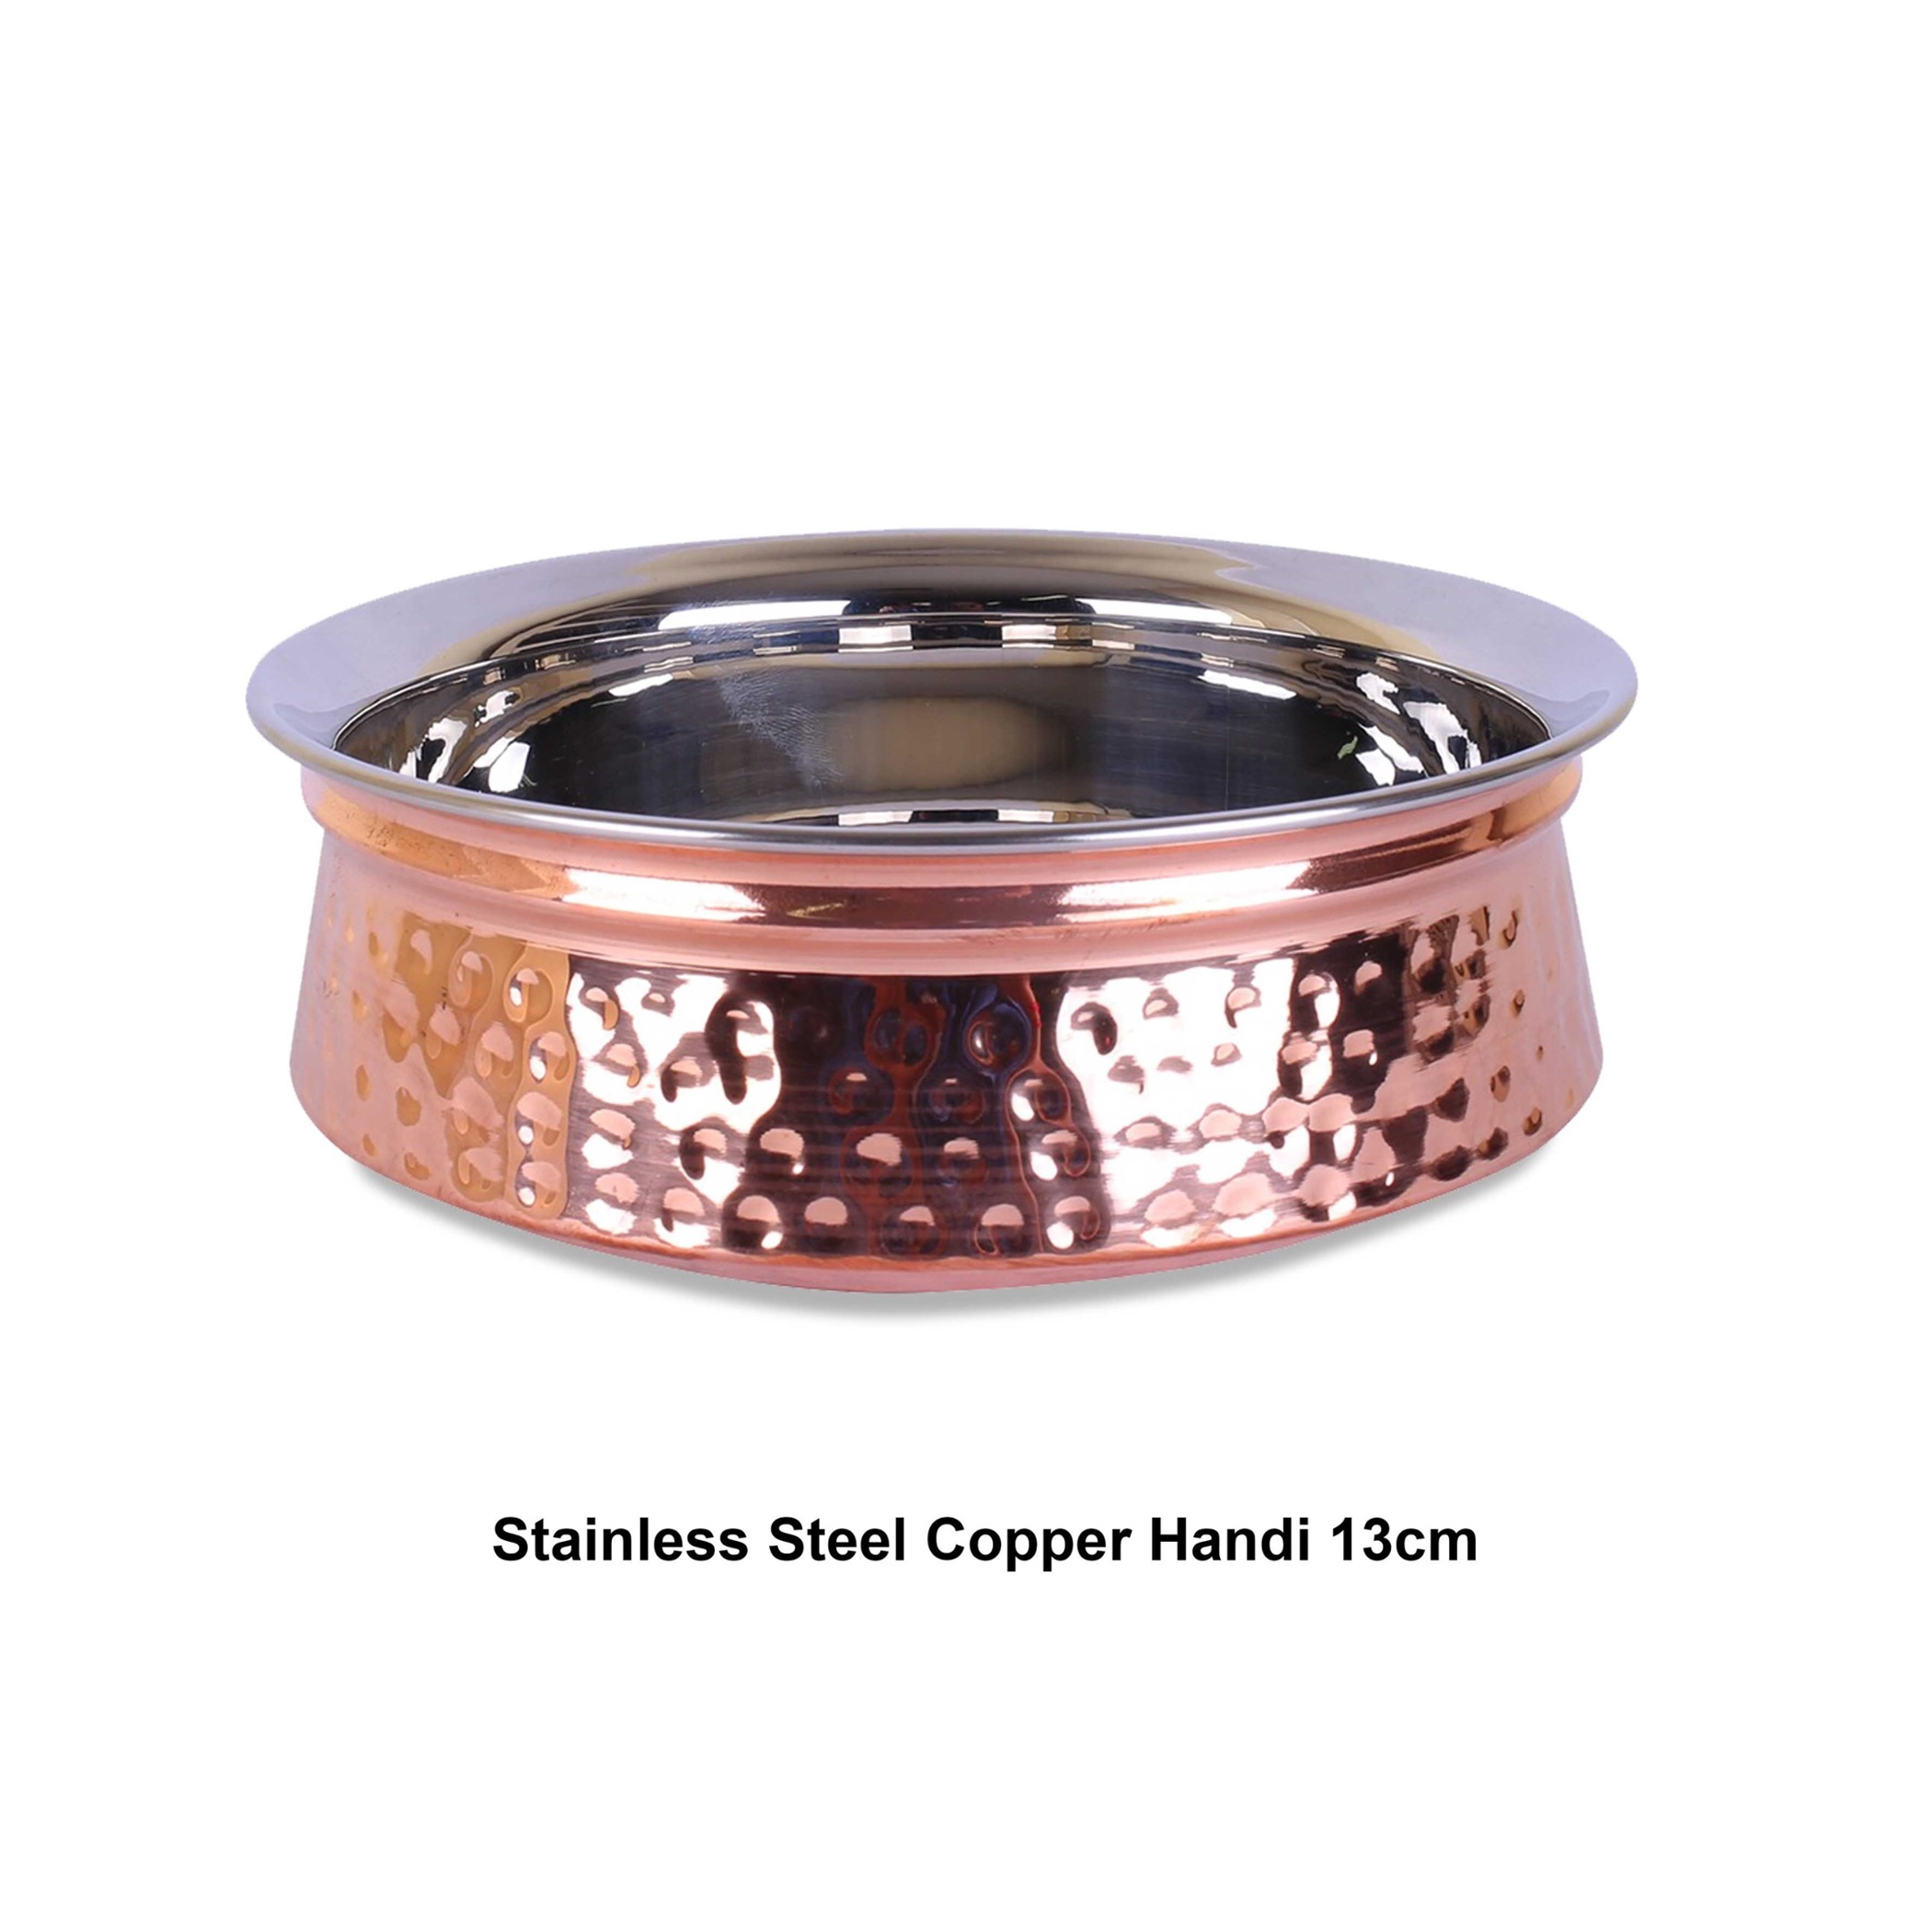 Stainless Steel Copper Handi 13 cm